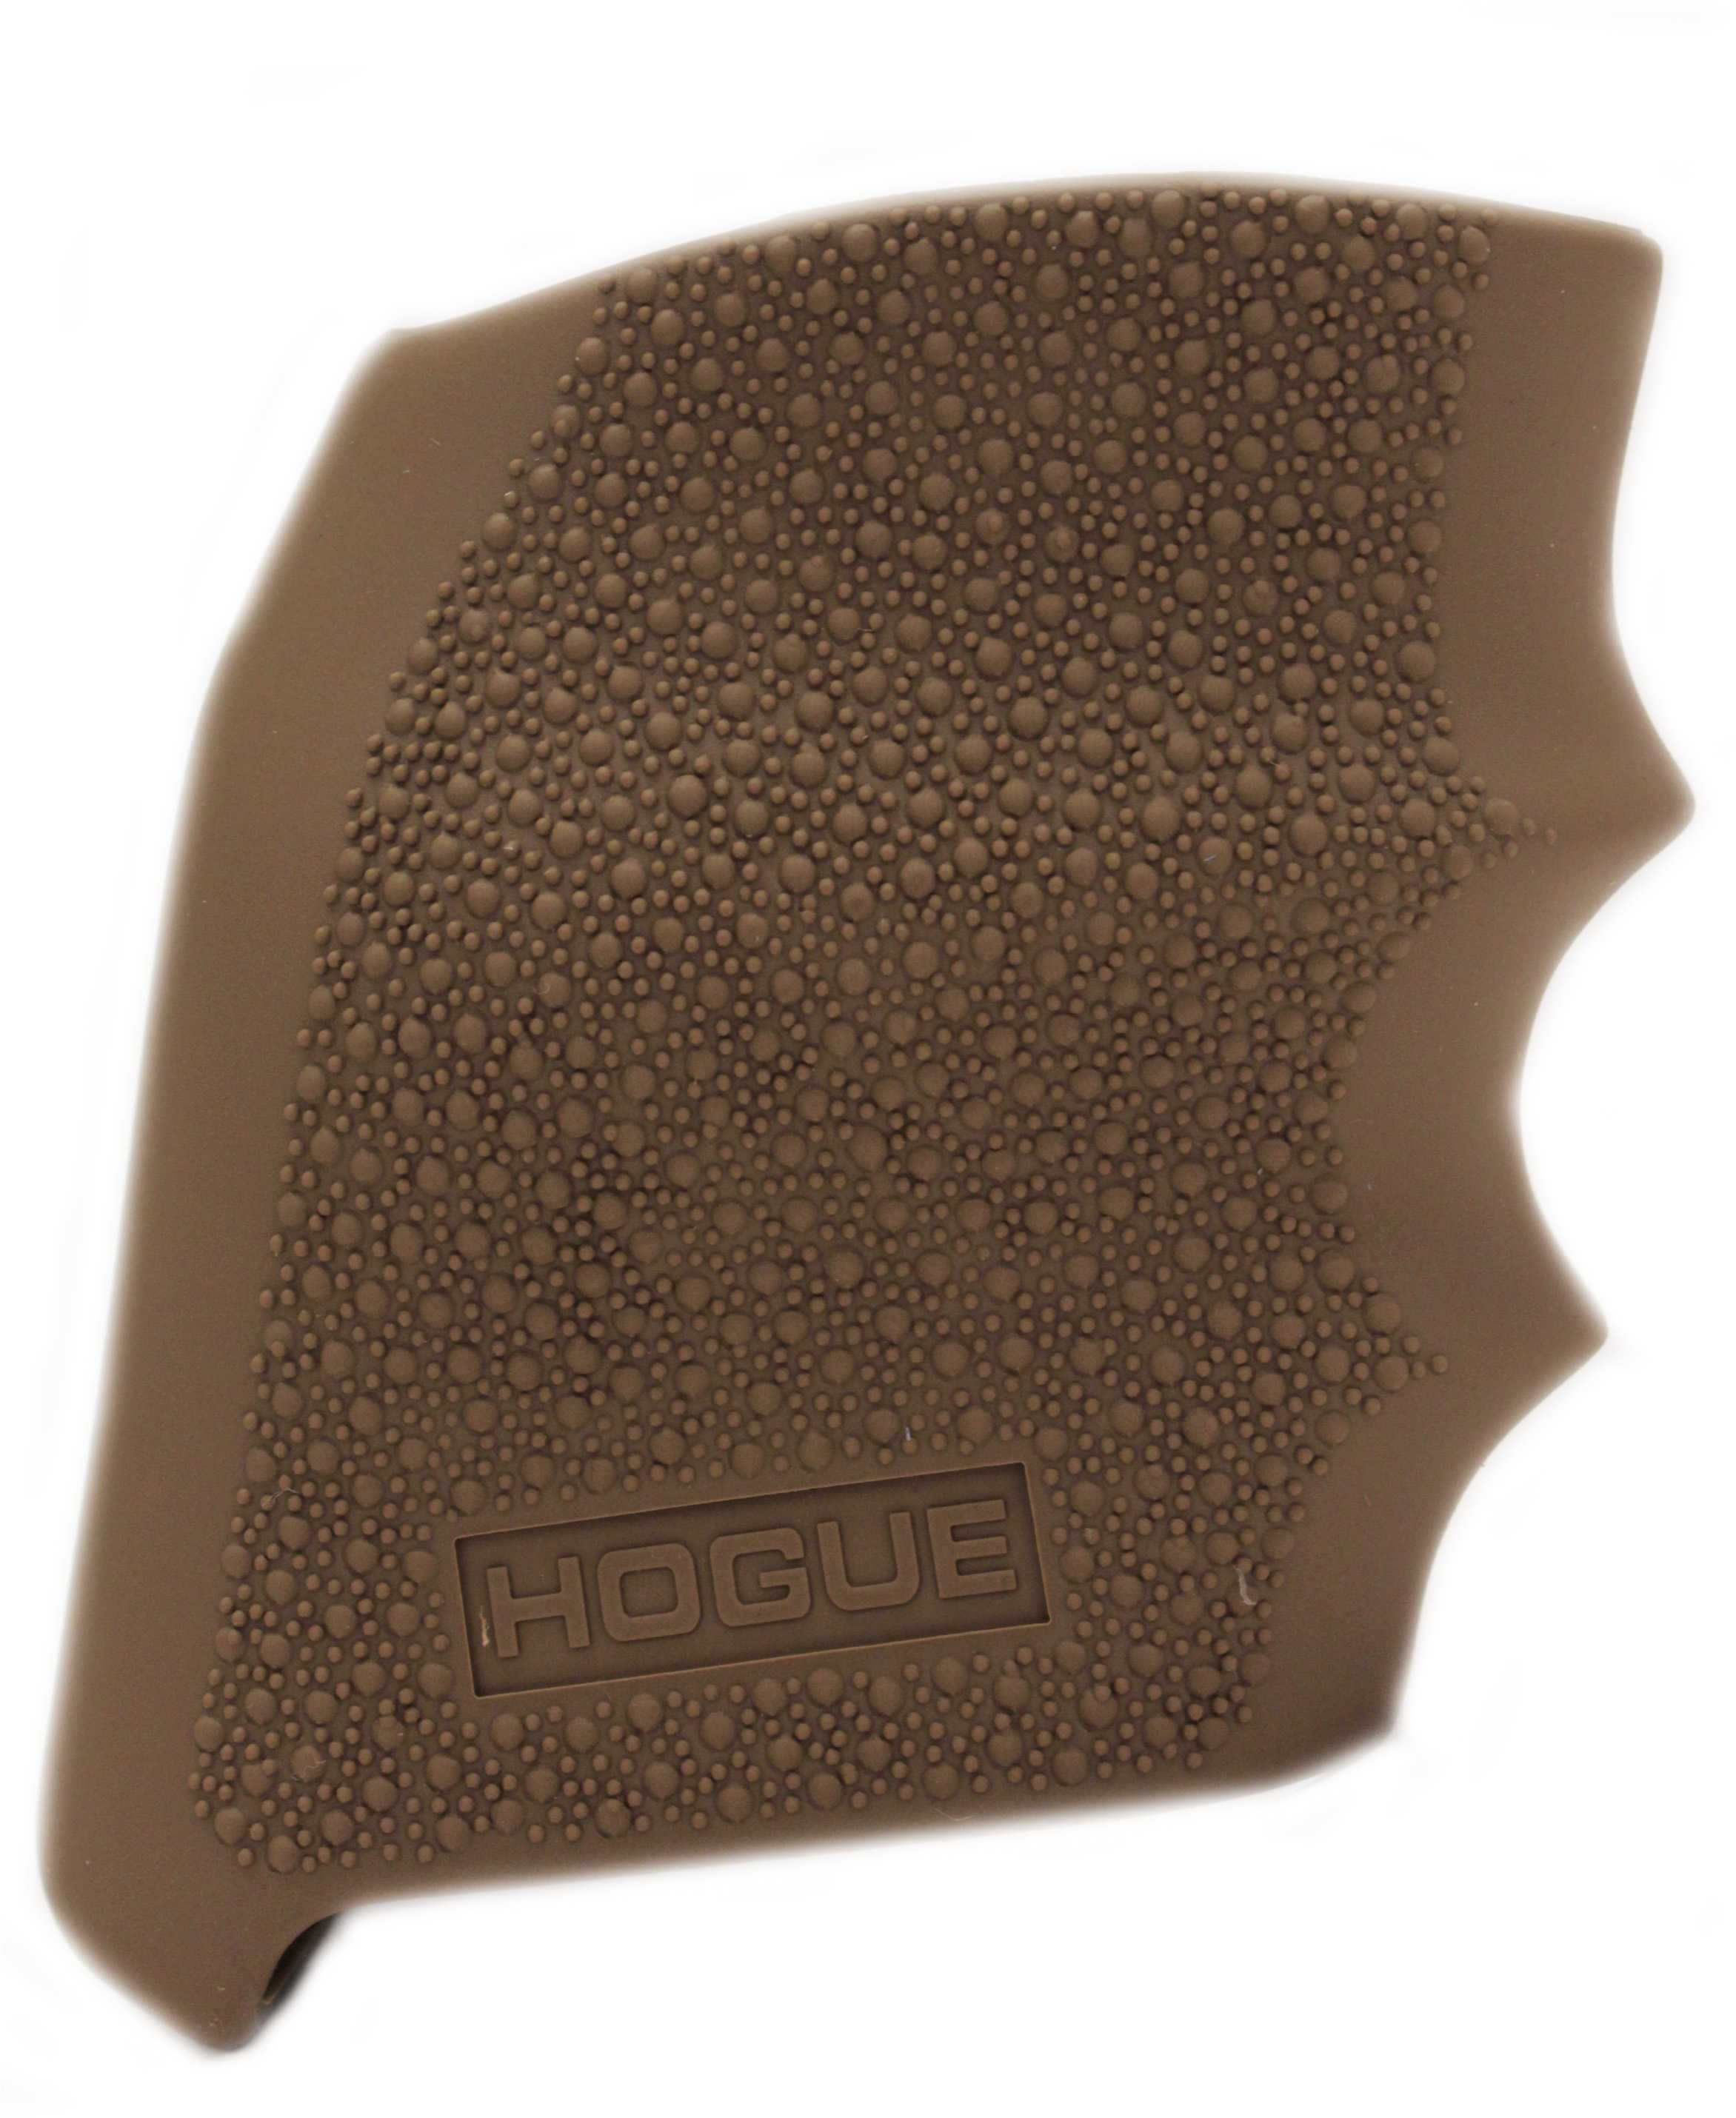 Hogue Handall Hybrid Spr Xd9 9mm Grip Tan